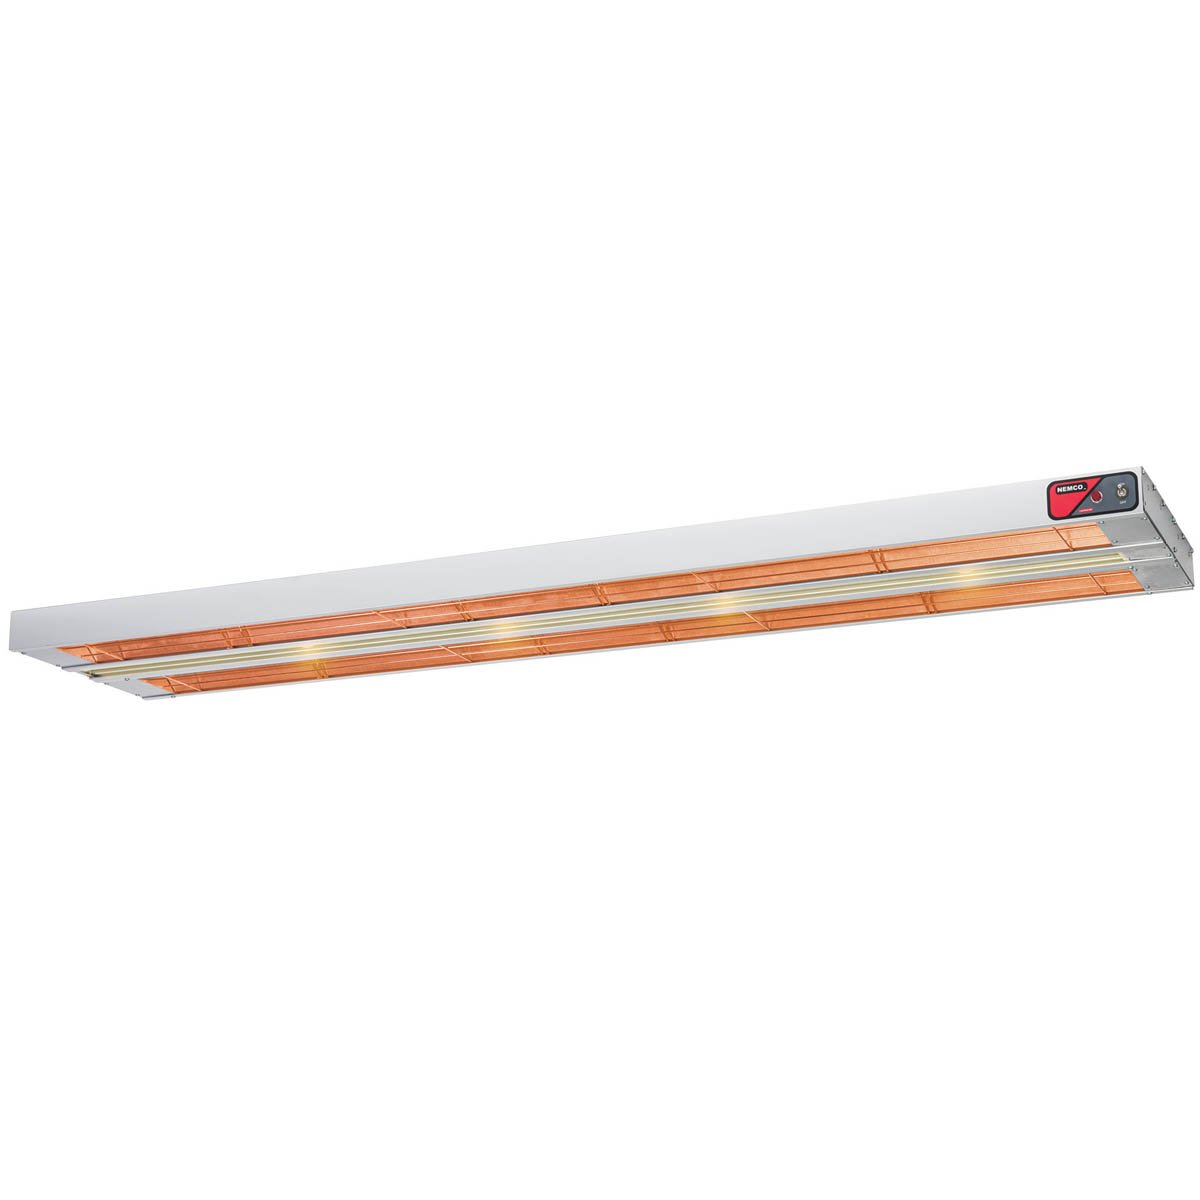 Nemco 6150-36-D-240 Strip Type Heat Lamp